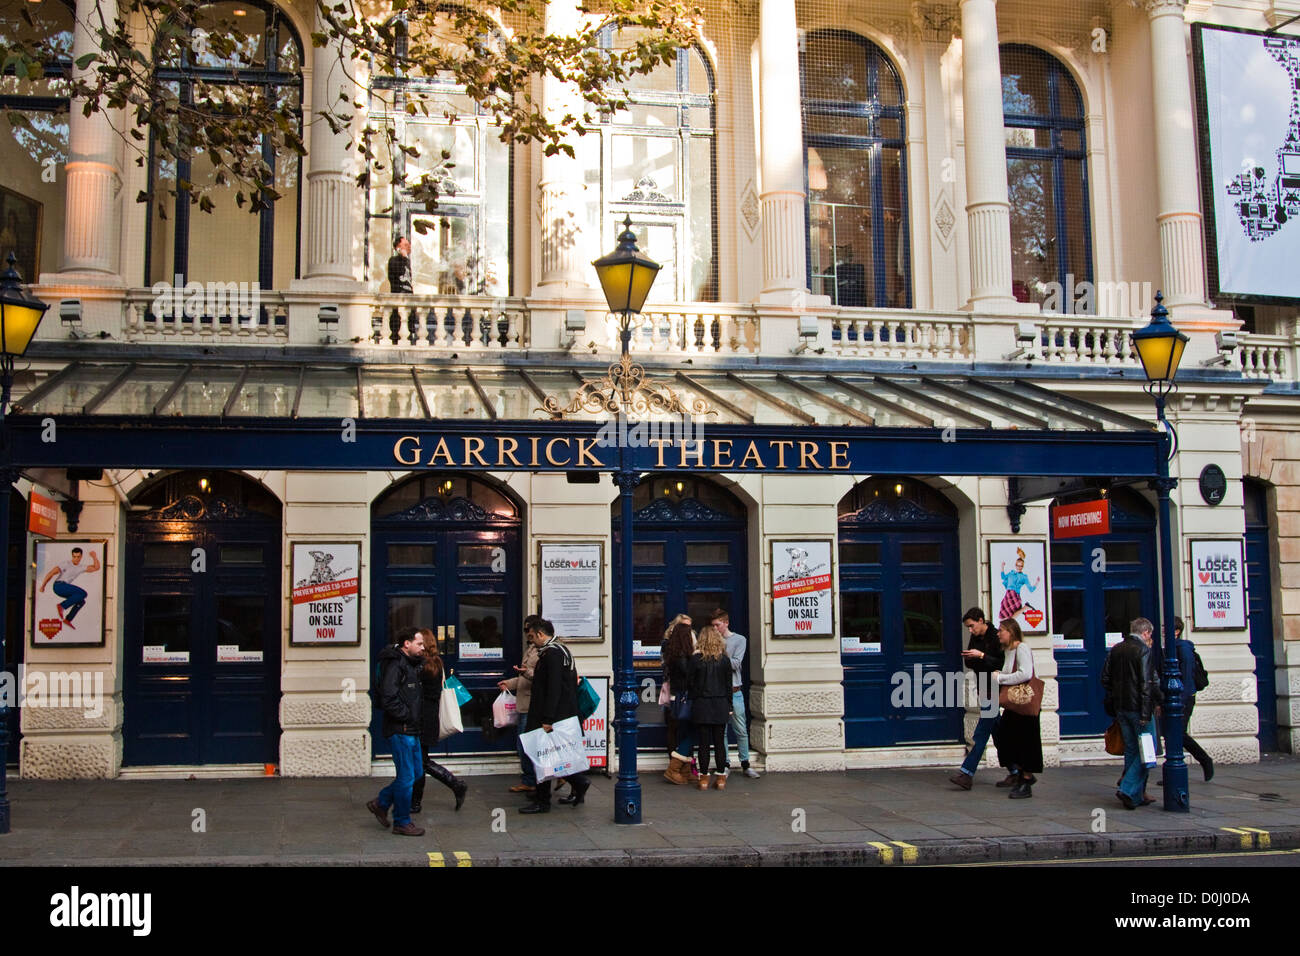 Garrick theatre London Stock Photo